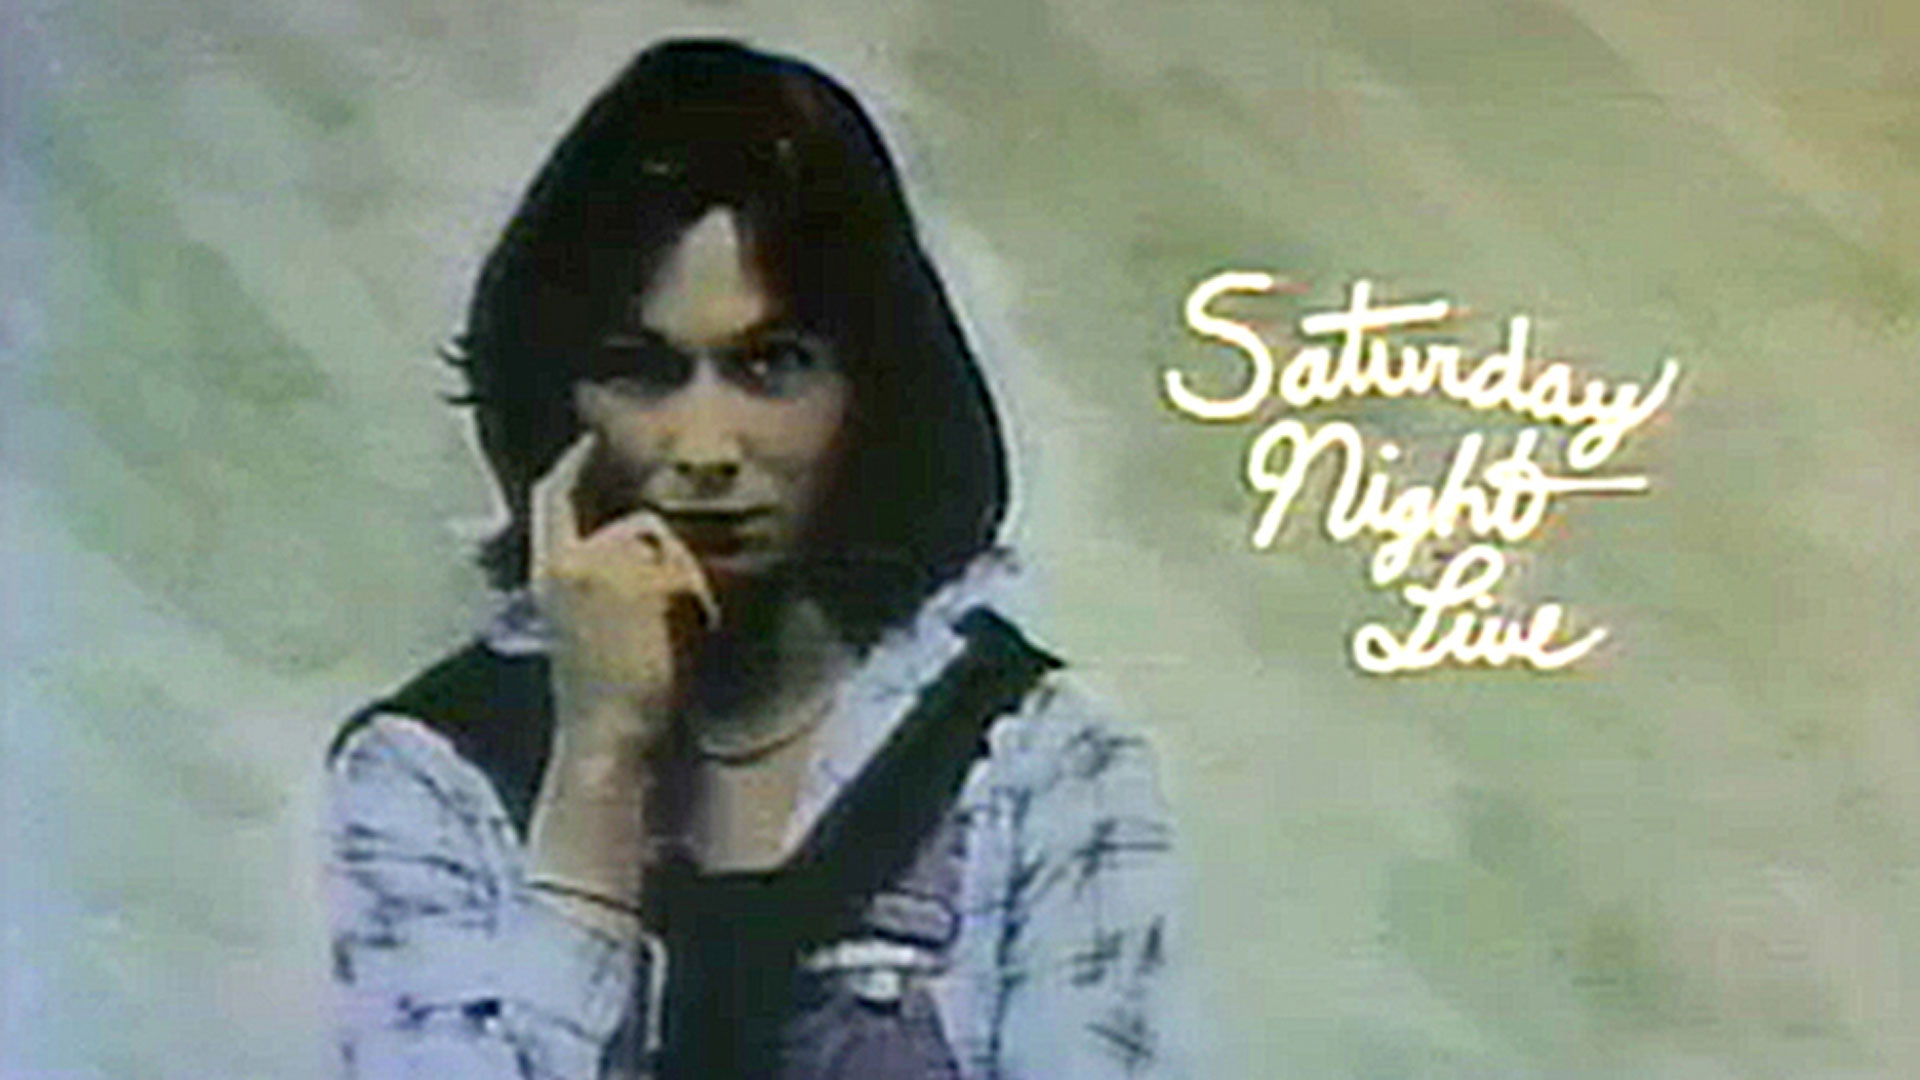 Watch Saturday Night Live February 24 - Kate Jackson - NBC.com